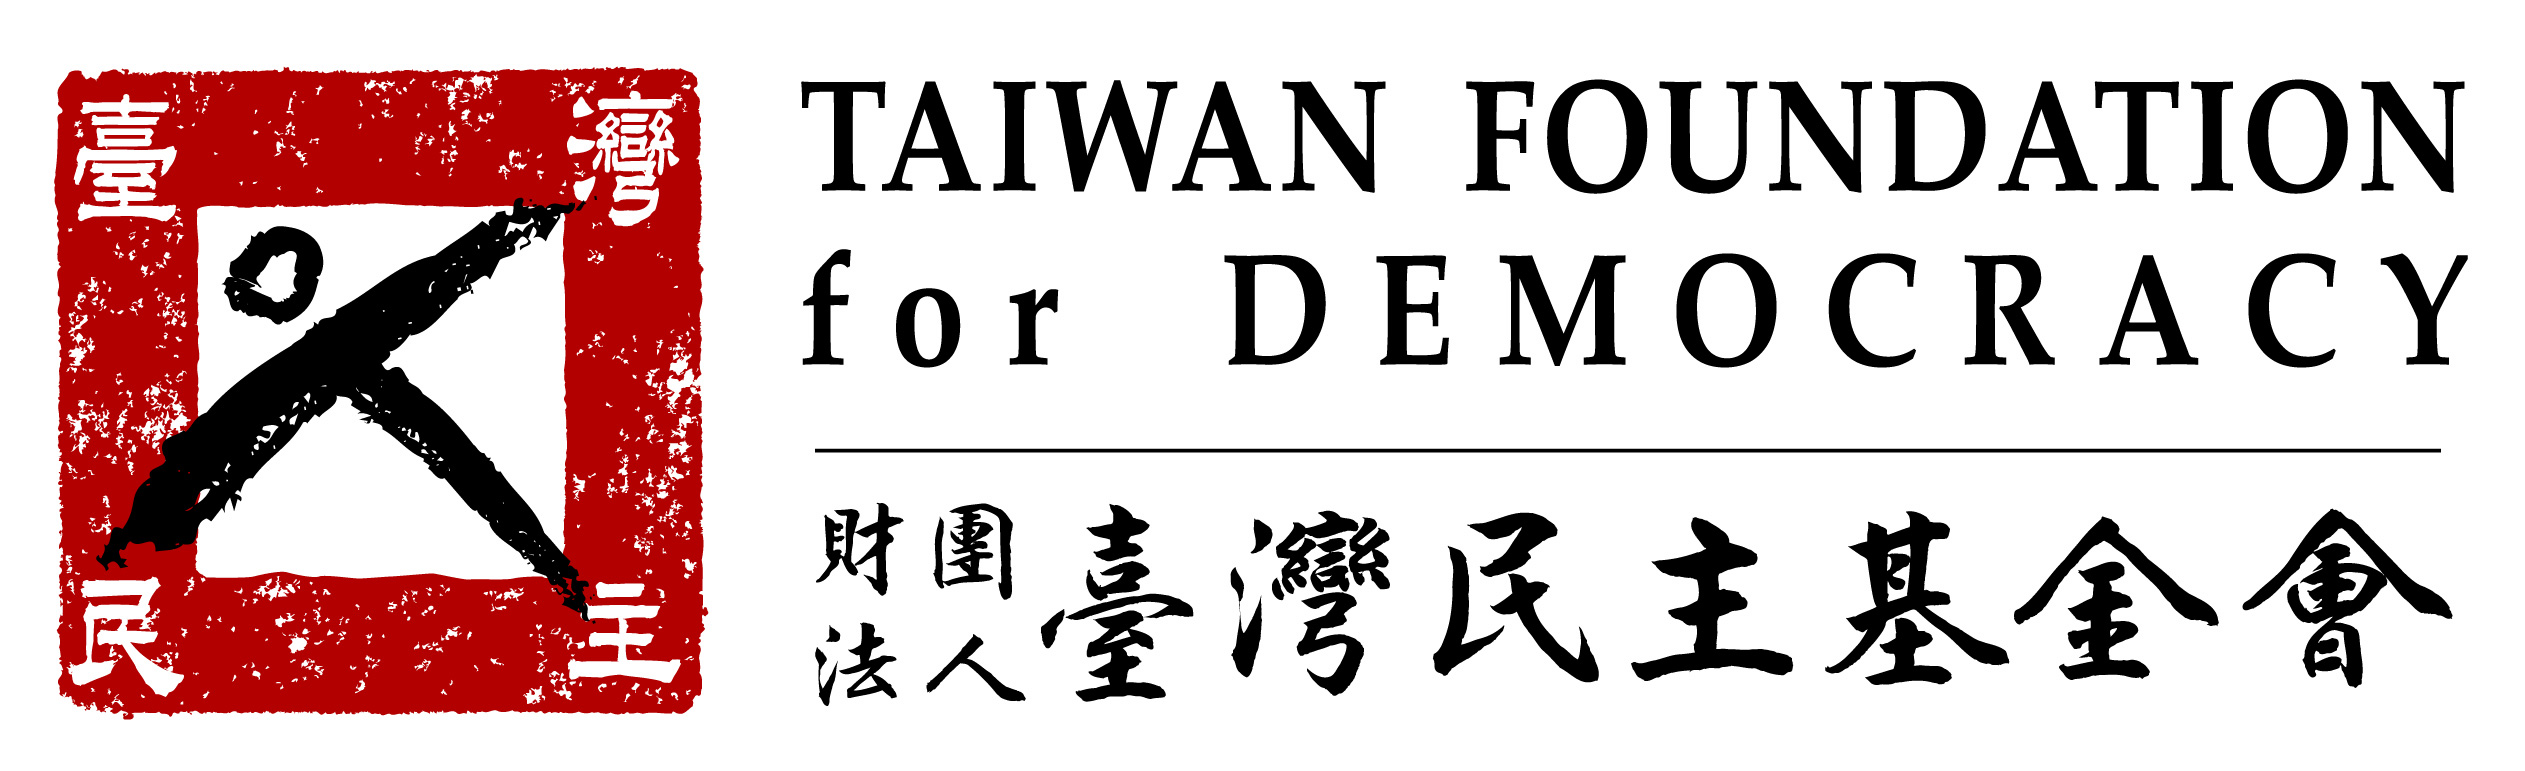 TFD logo (1) - Copy